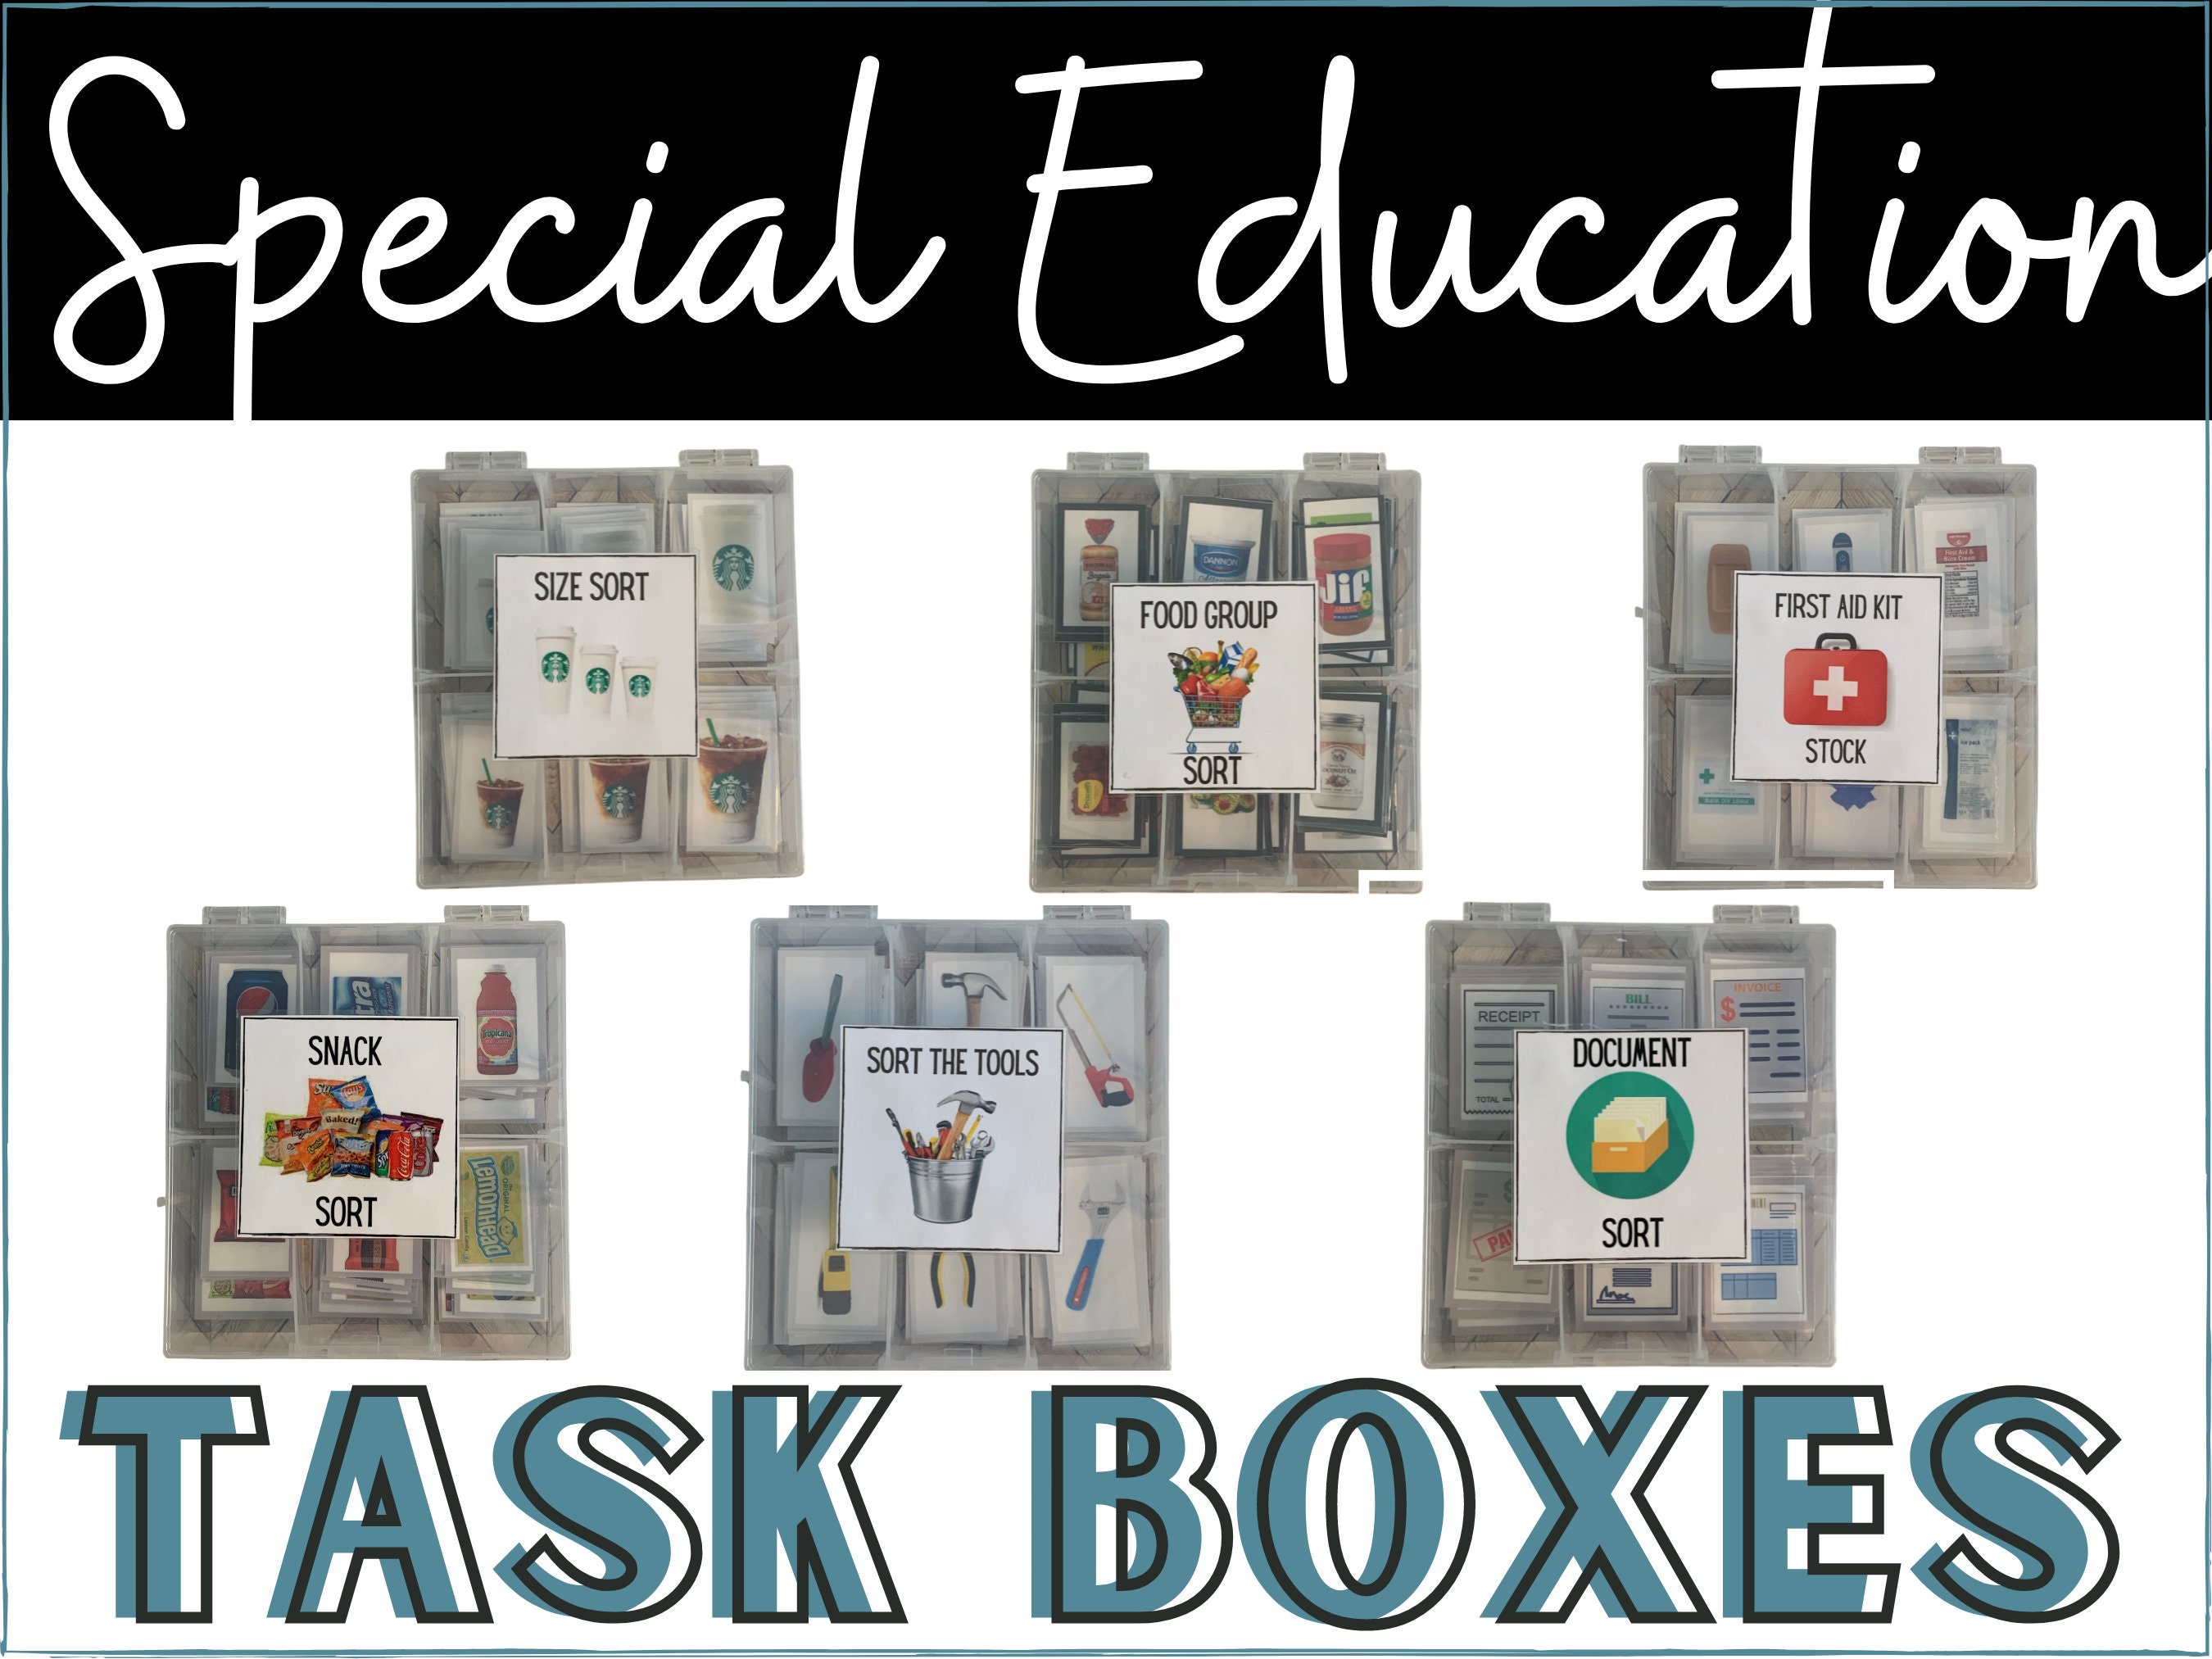 Task Box for Special Education Vocational Task Life Skills Work Box Work  Tasks for ABA Autism Task Box Sort the Tools Job Skill 